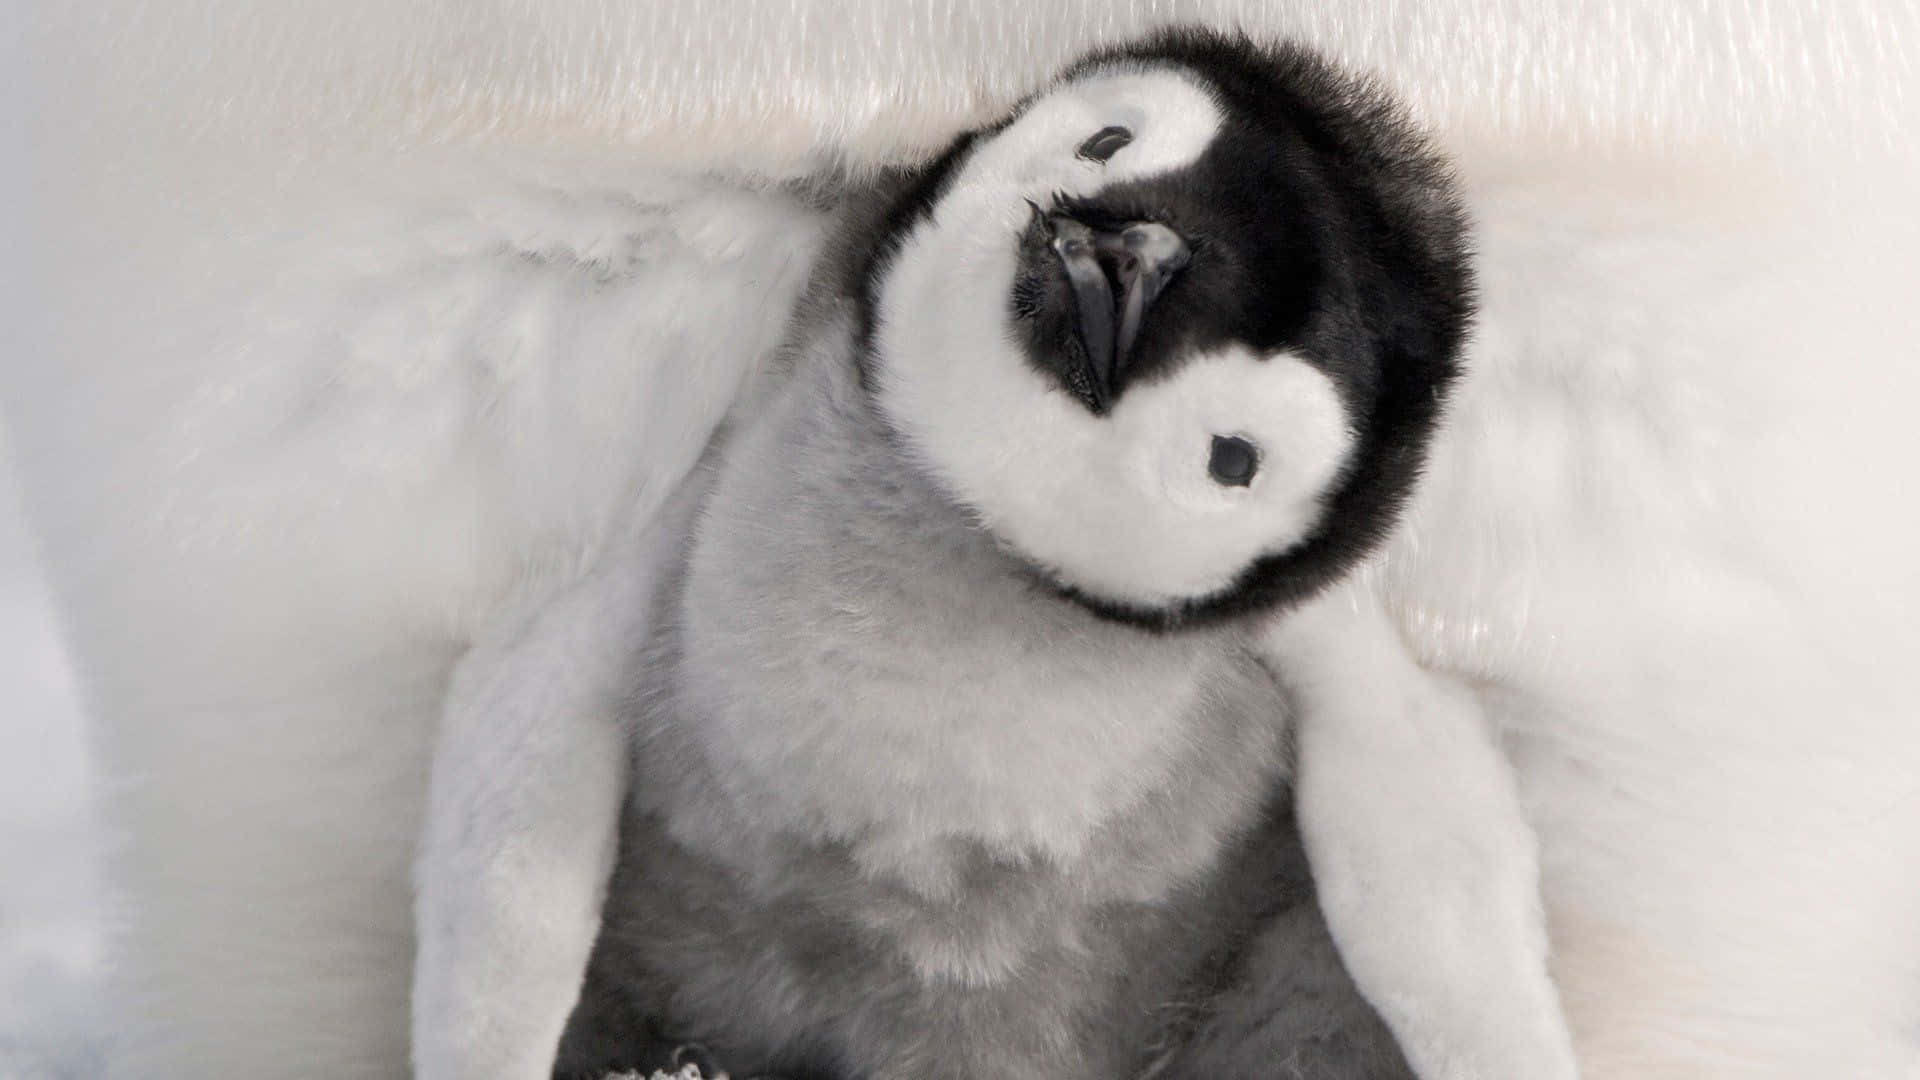 Adorable Baby Penguin